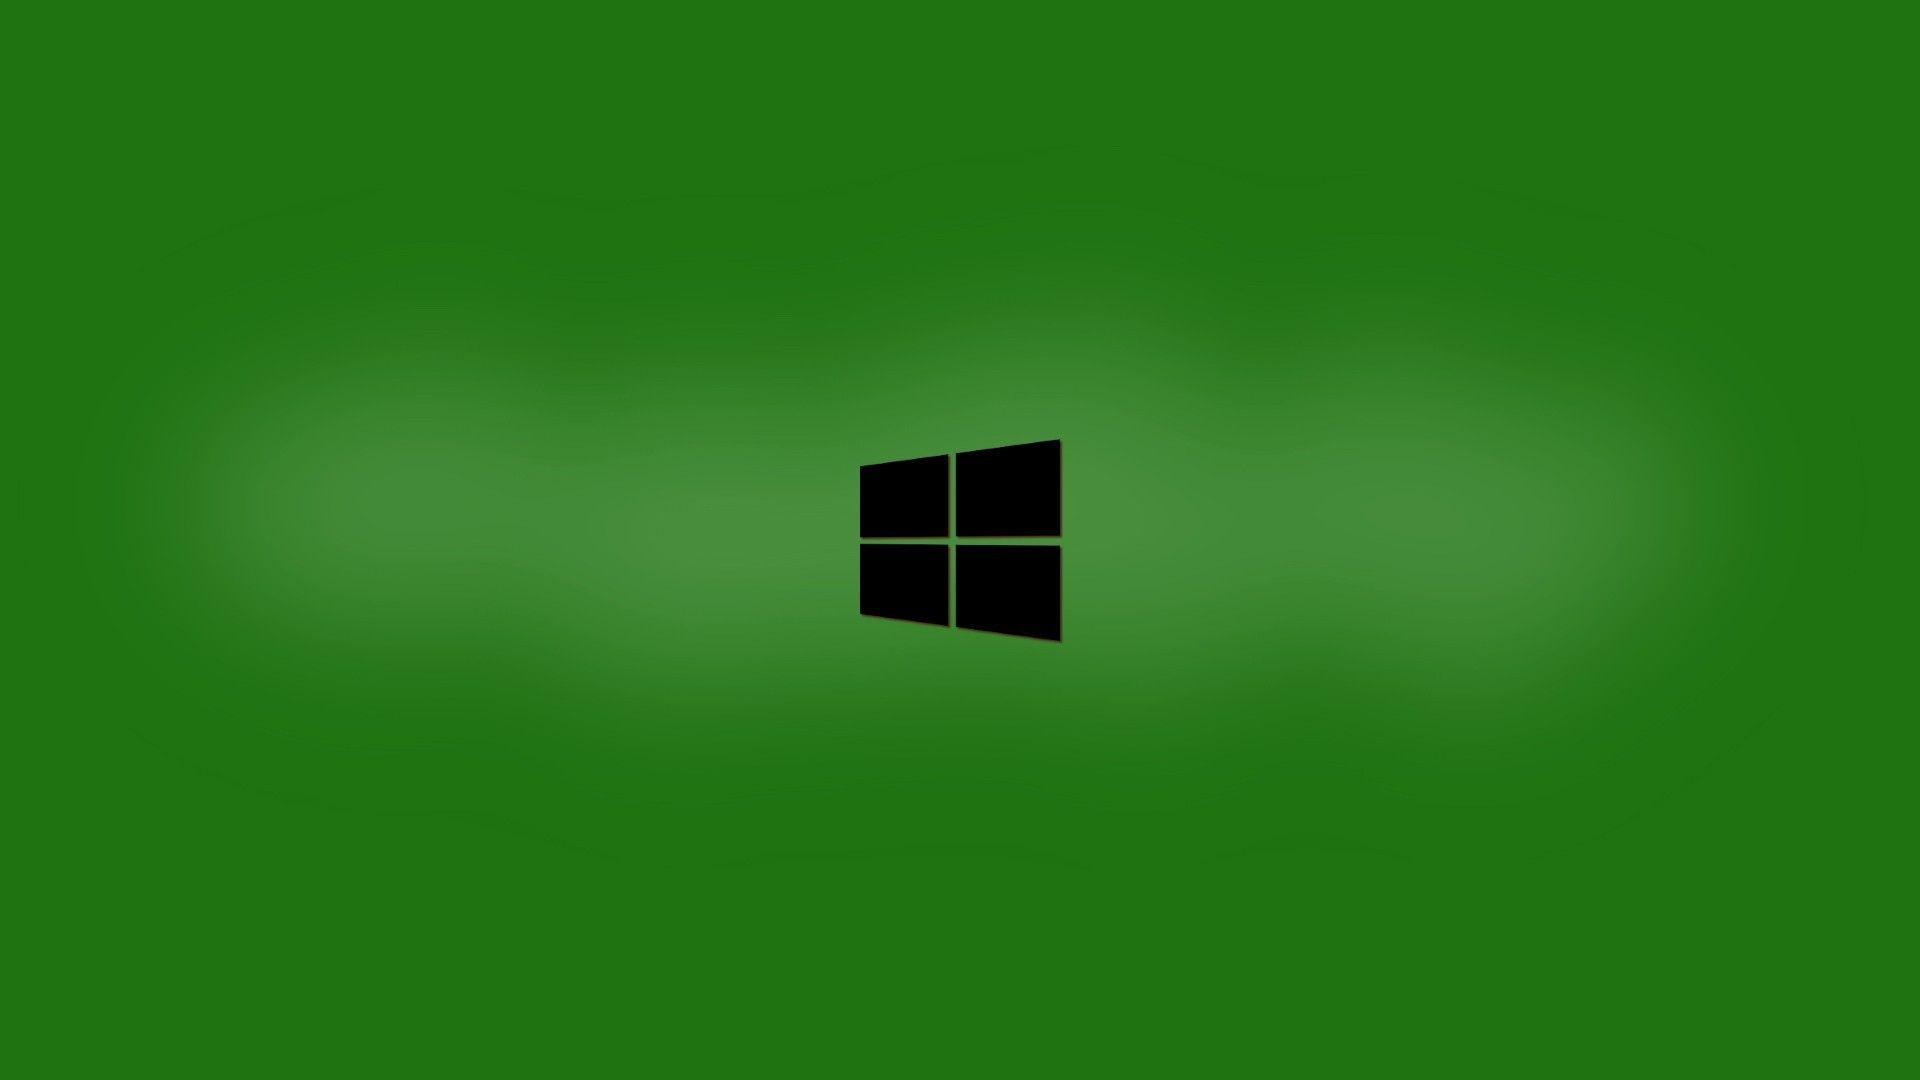 Neon Green Windows 10 theme [Dark/Light mode] - 108themes.com